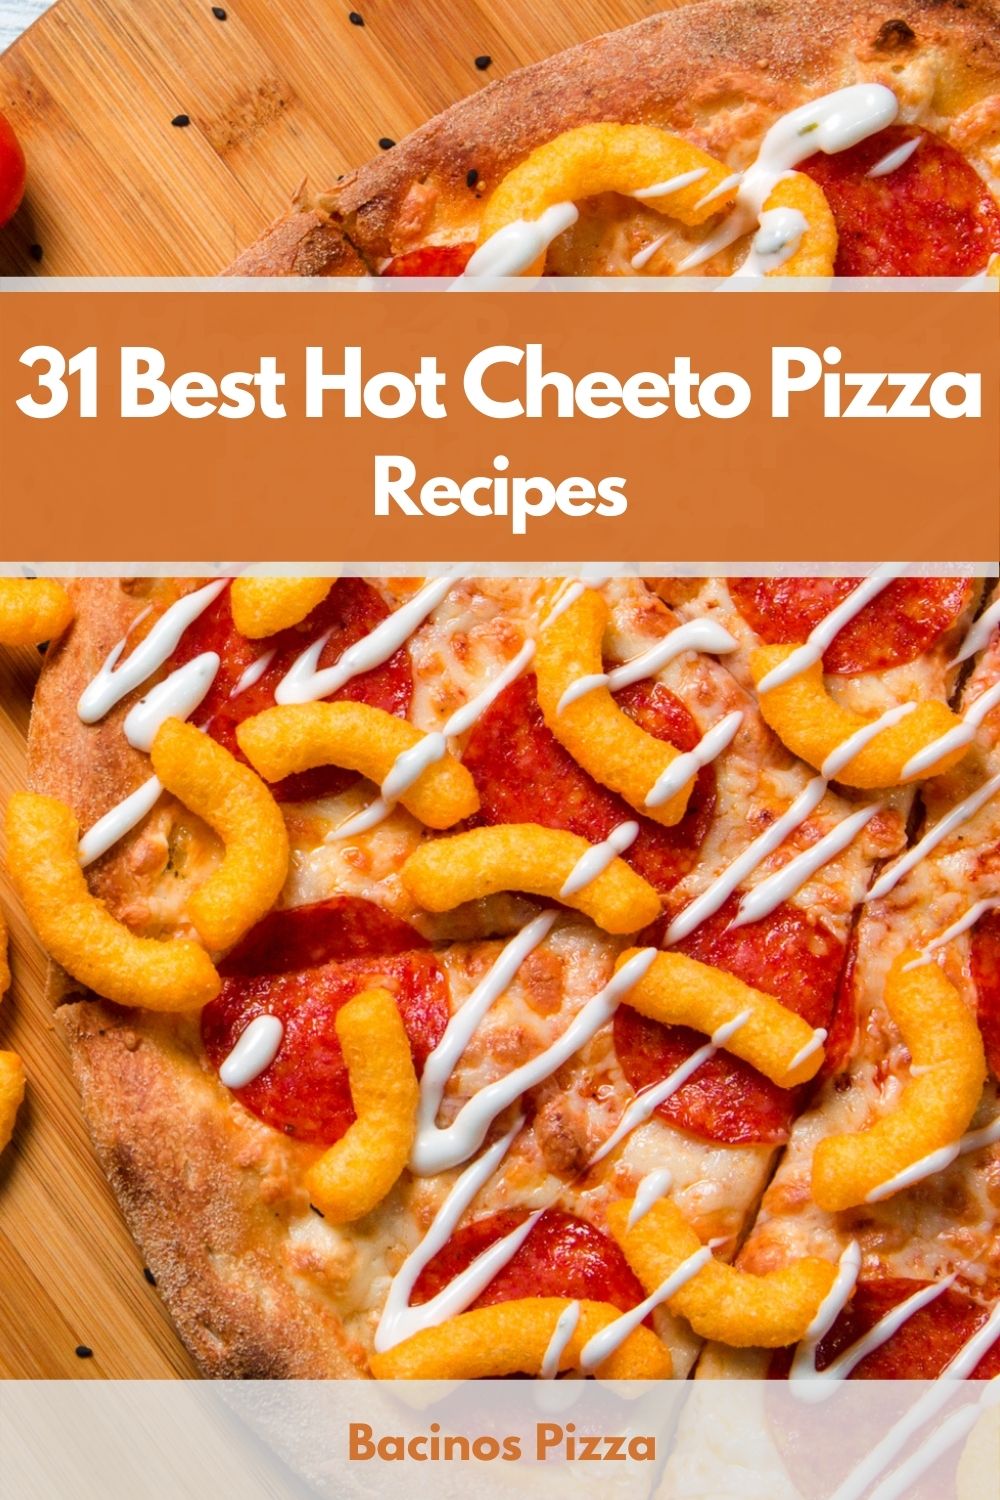 31 Best Hot Cheeto Pizza Recipes pin